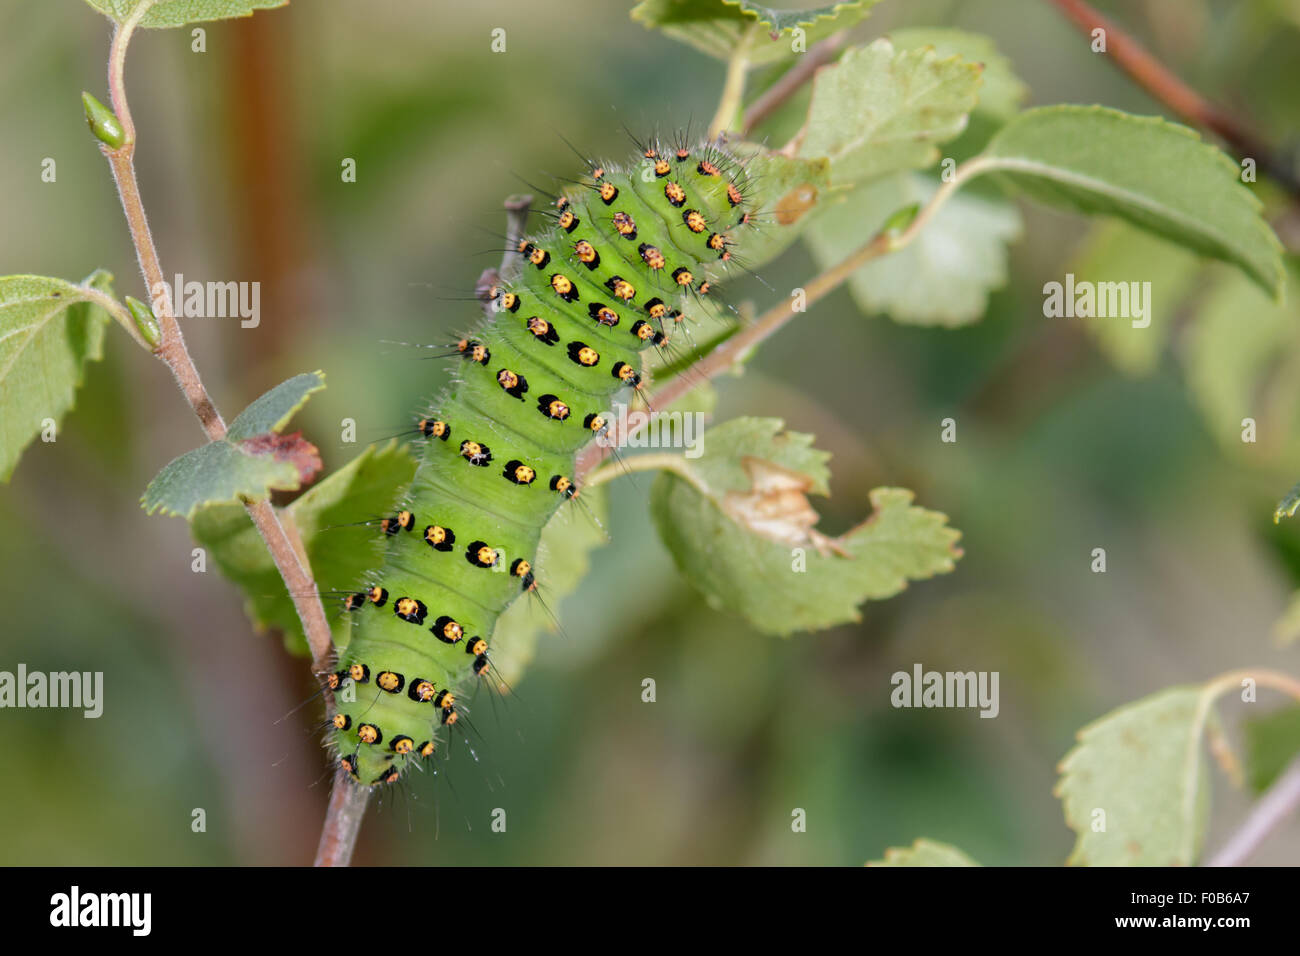 L'imperatore Moth Caterpillar (Saturnia pavonia) alimentazione mangiare su alcune foglie verdi. Foto Stock